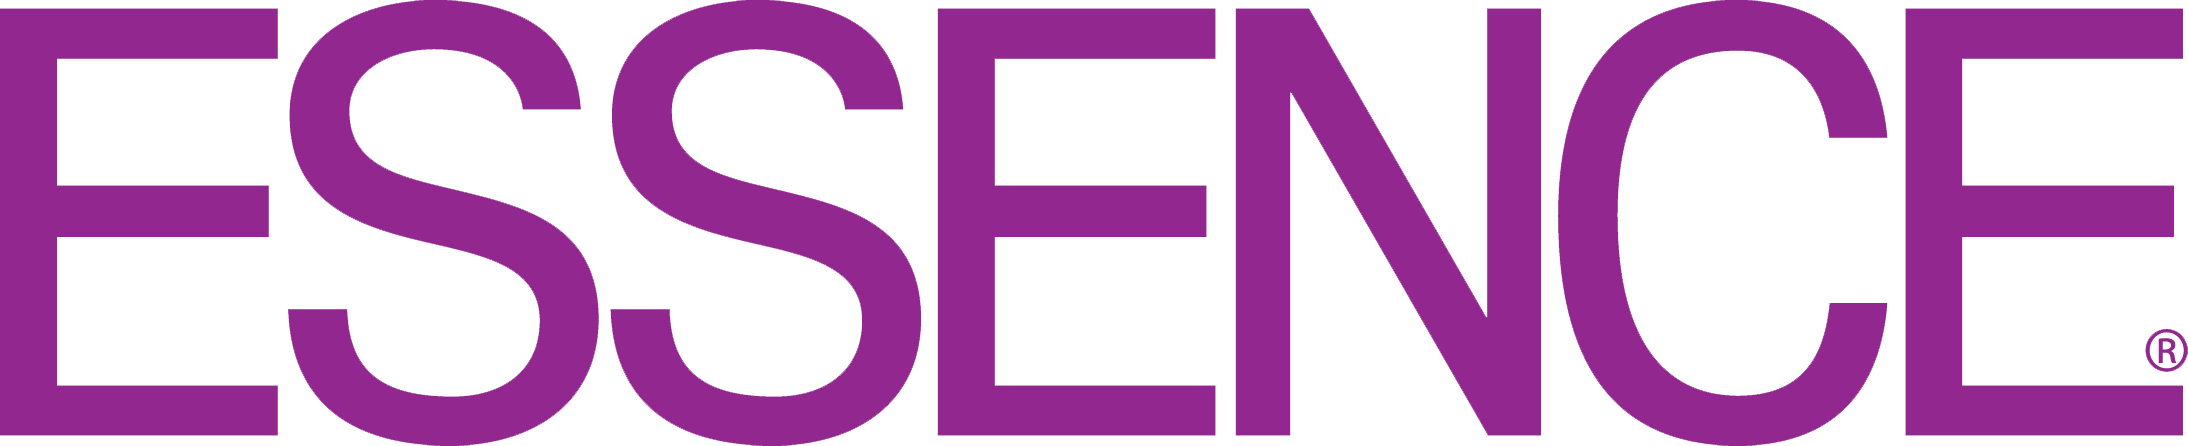 essence-logo.png